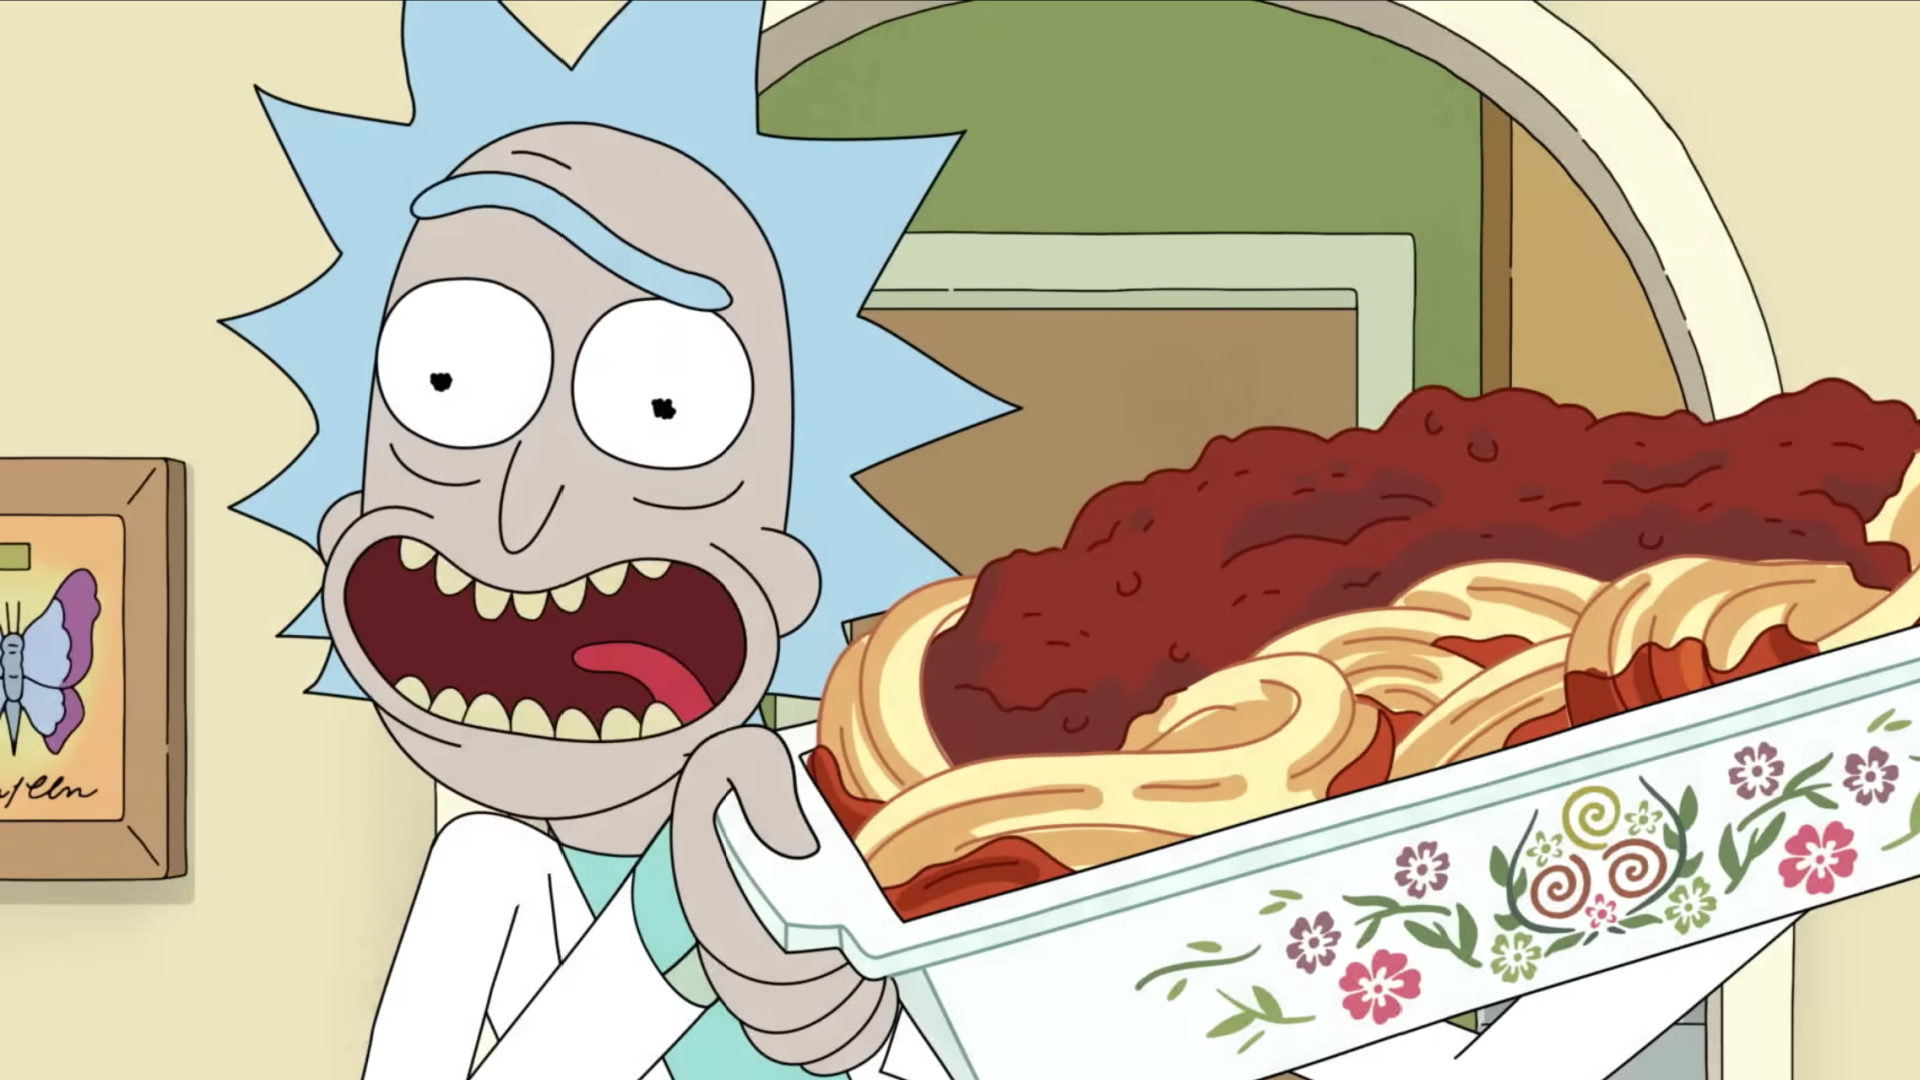 Rick and Morty (Season 7) - October 16 (HBOMax)